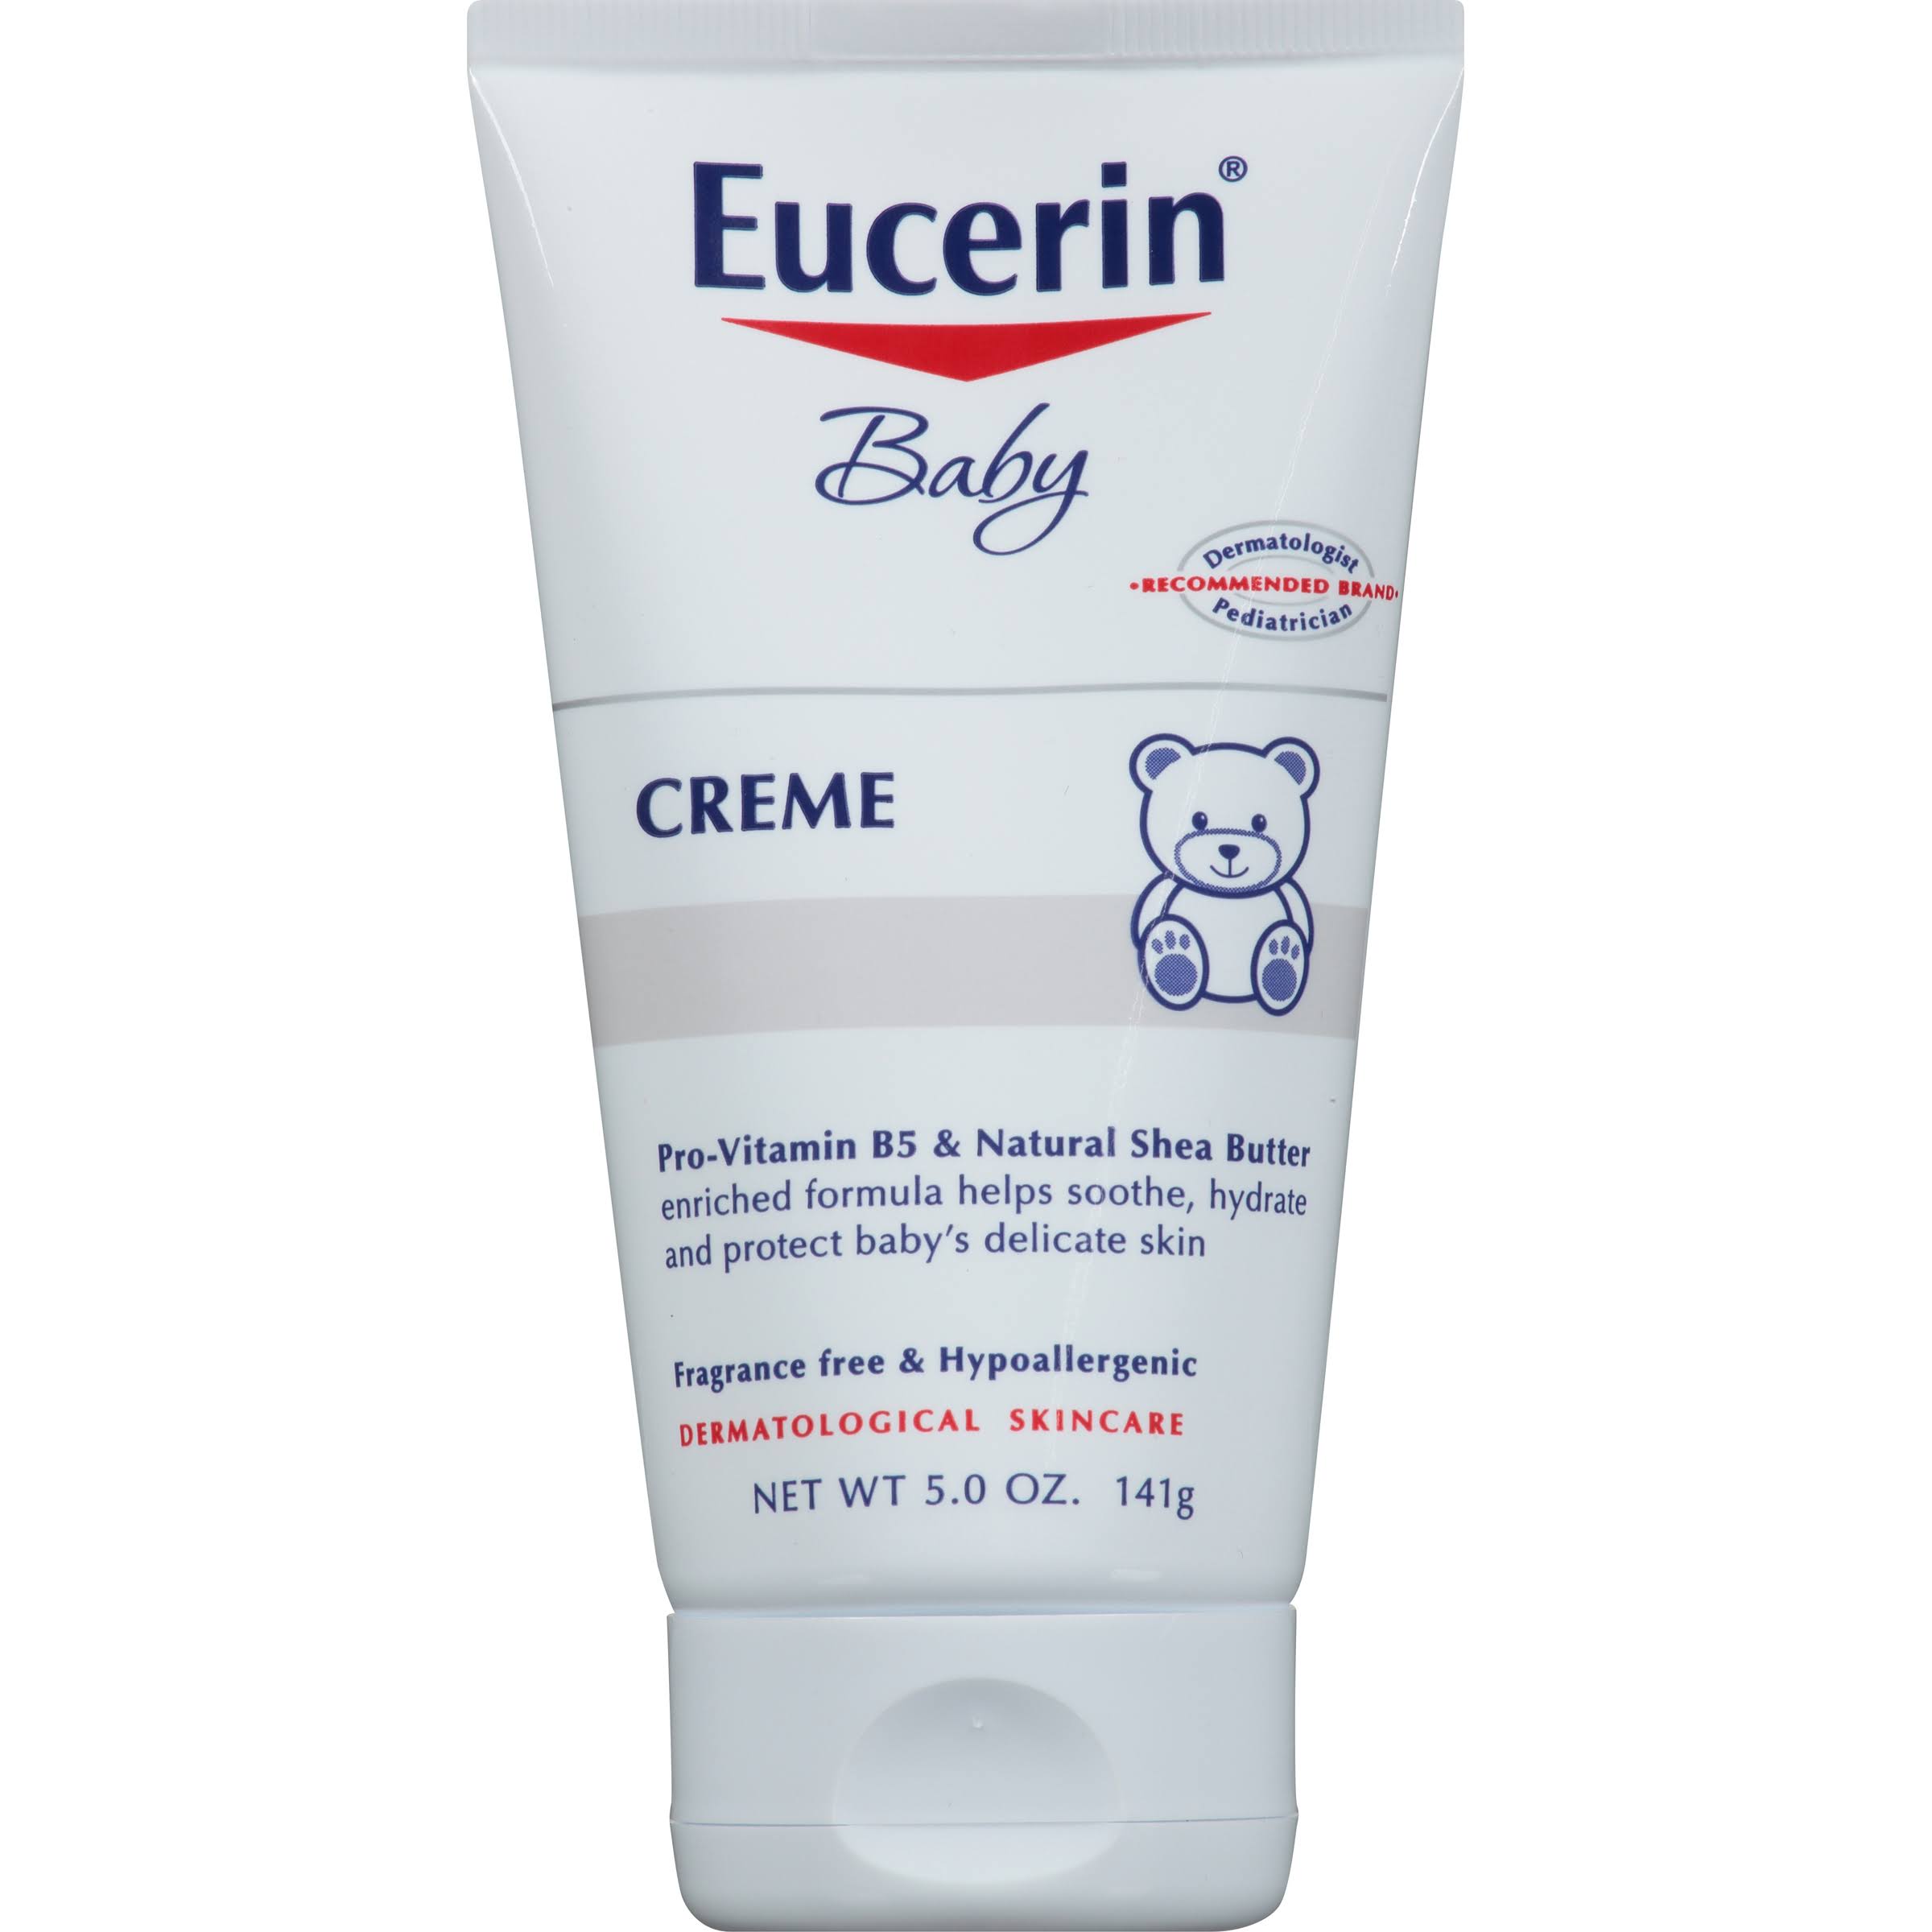 Eucerin, Baby Creme 141g